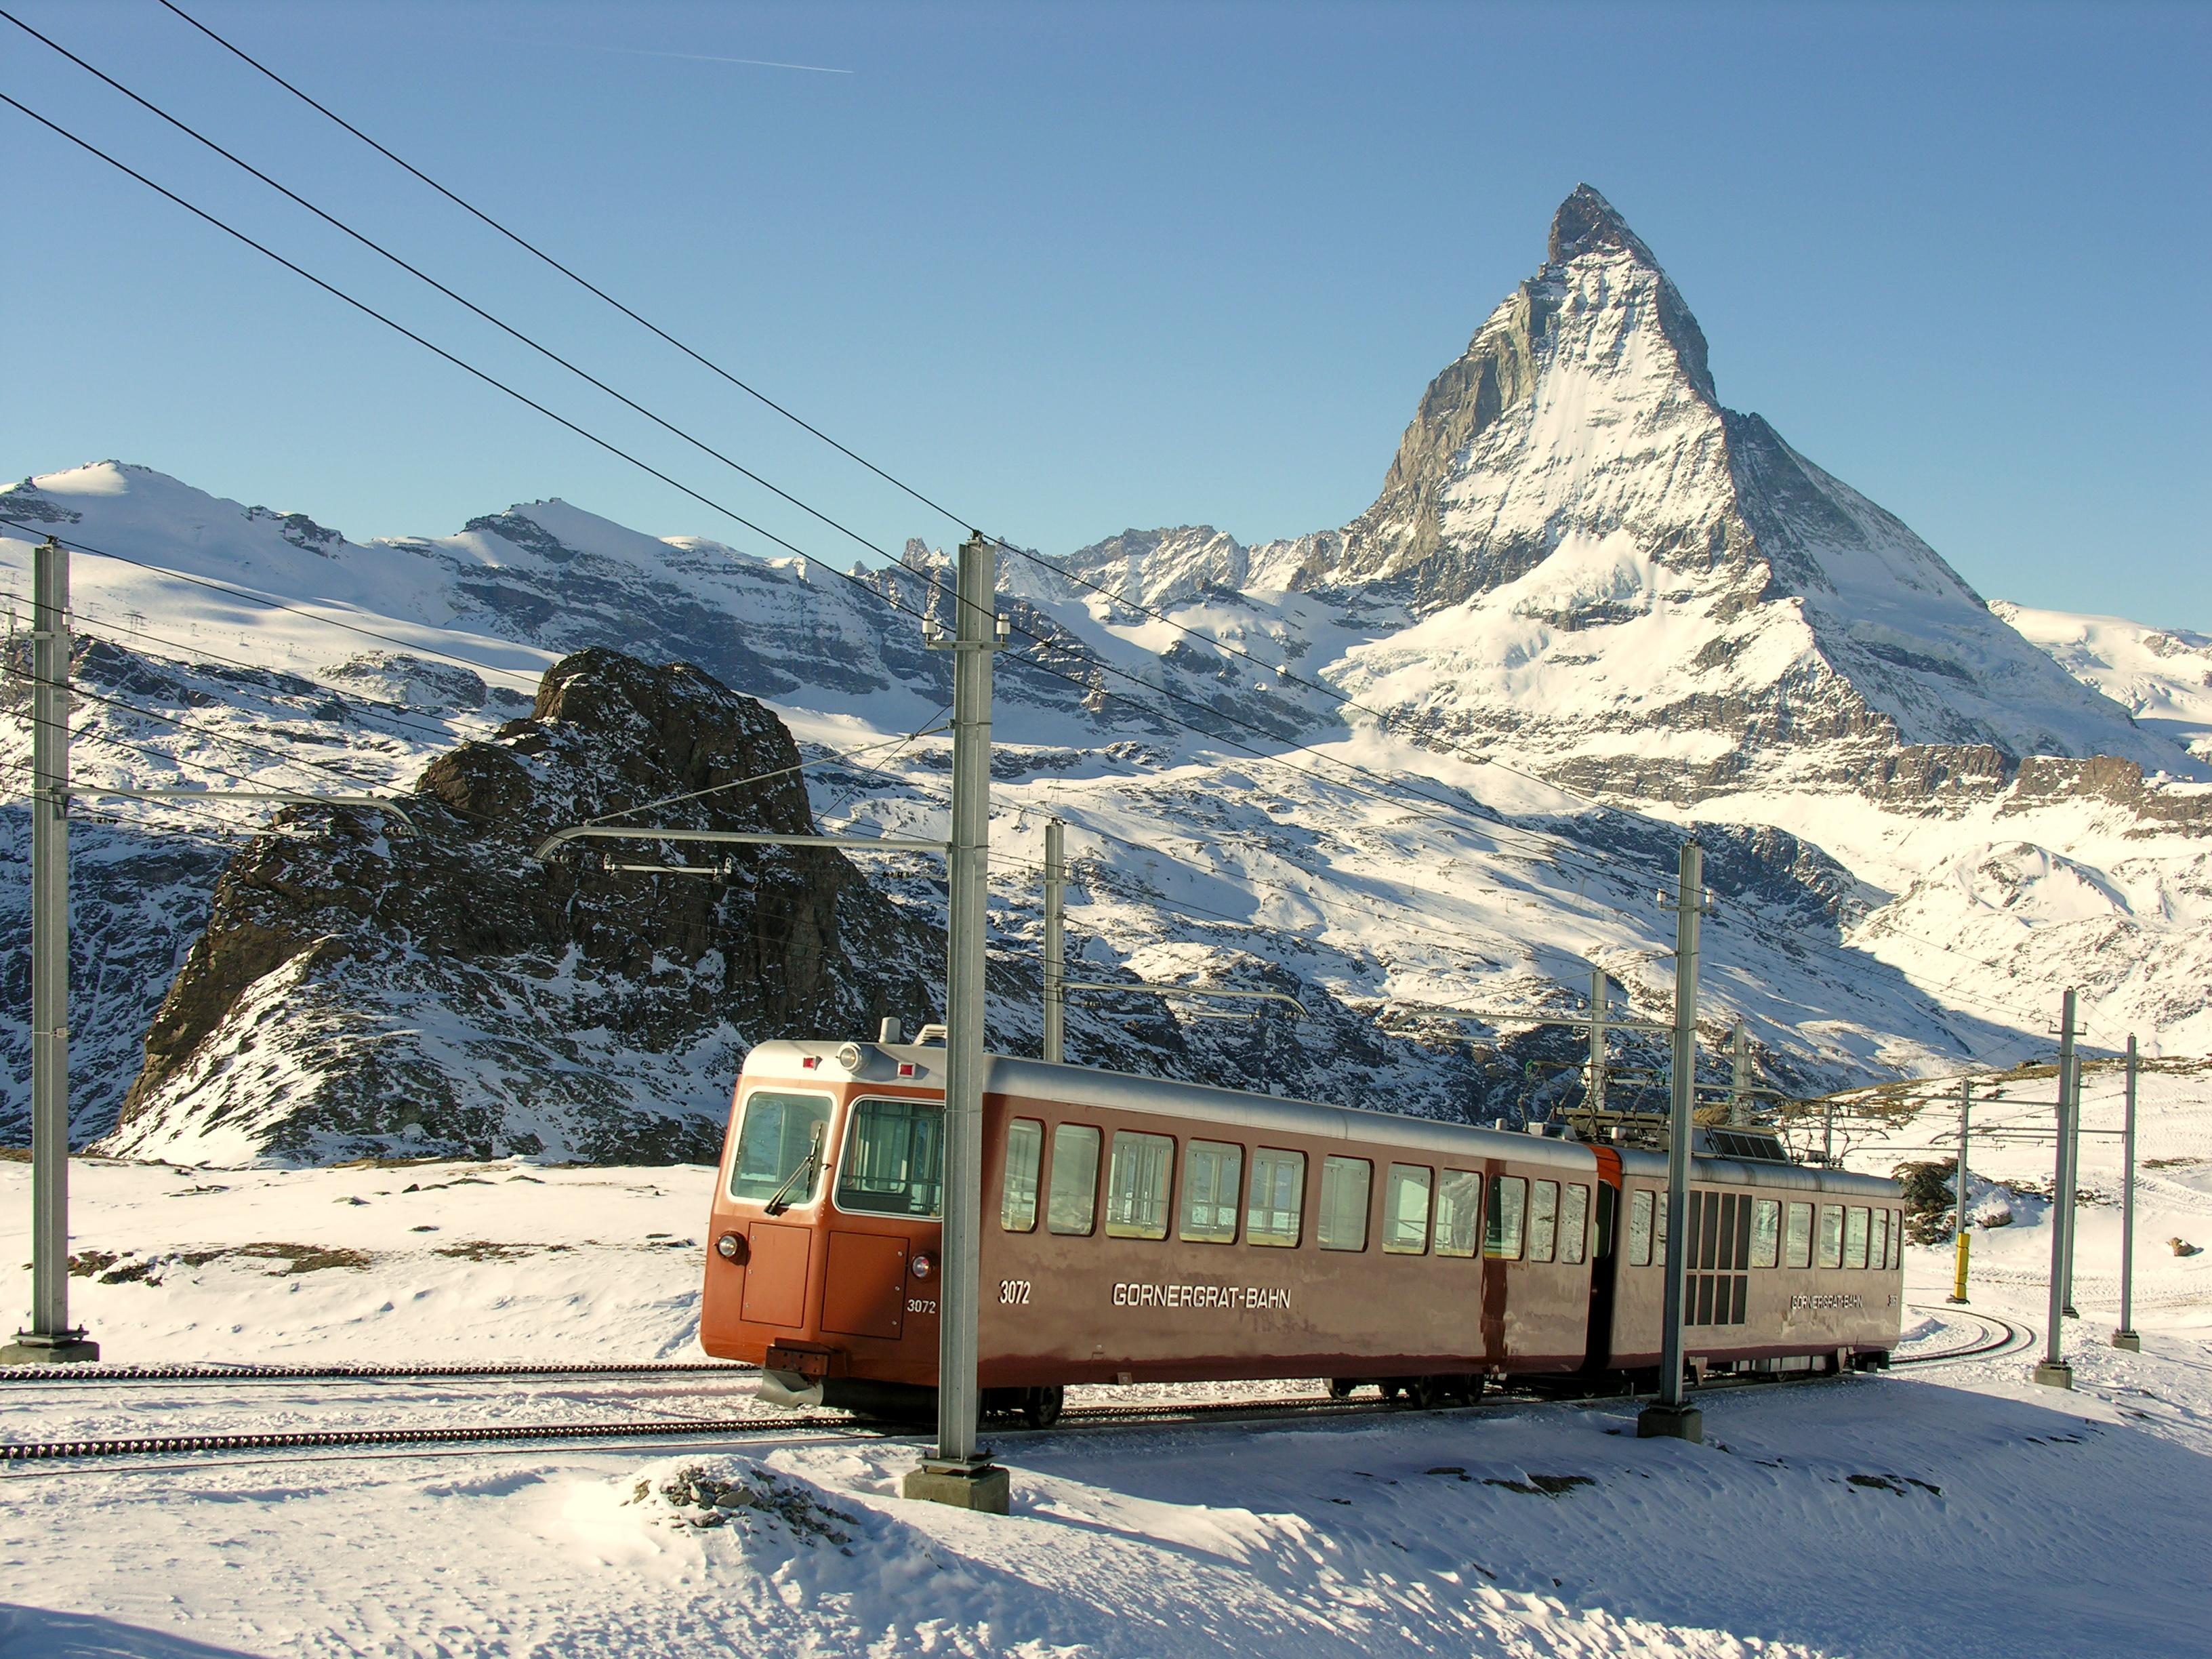 Matterhorn Switzerland wallpaper and image, picture